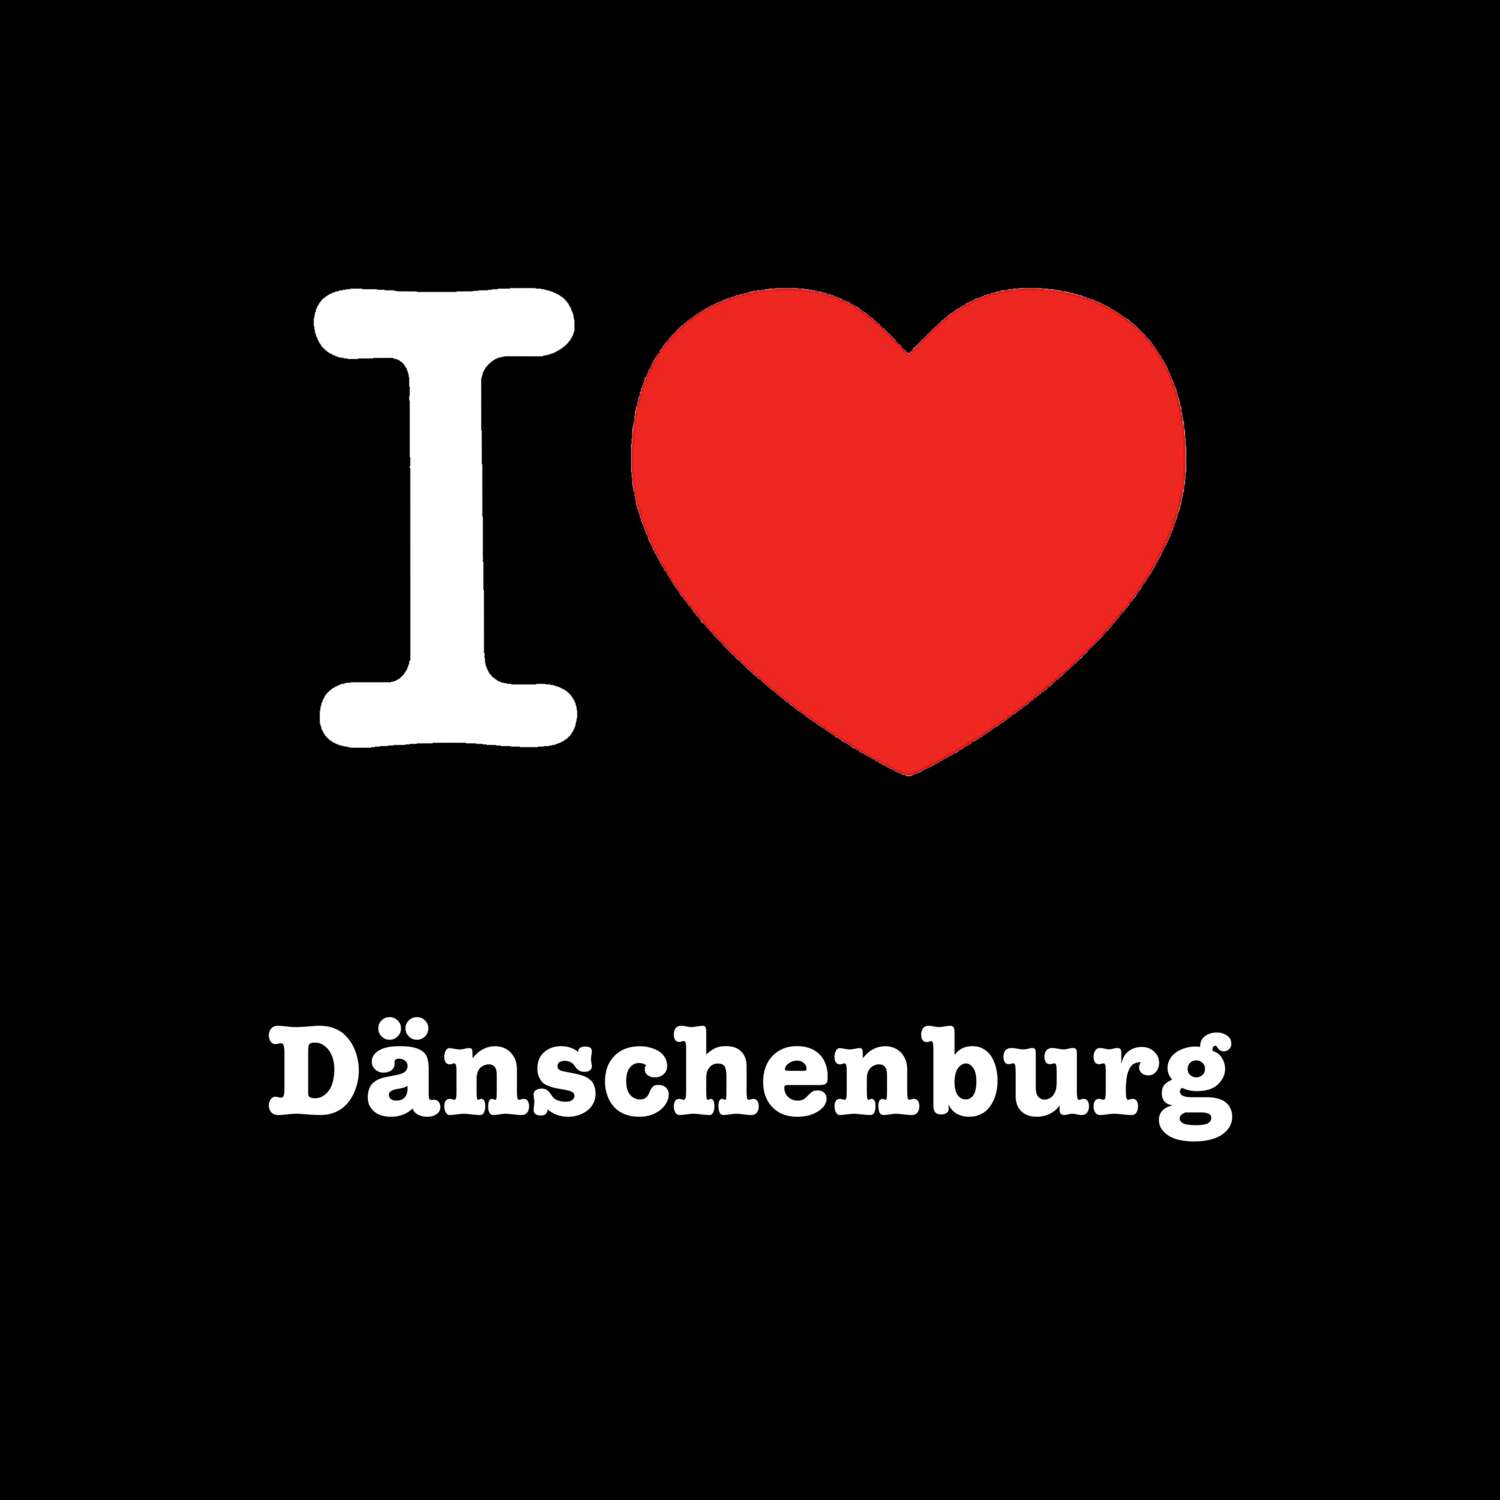 Dänschenburg T-Shirt »I love«